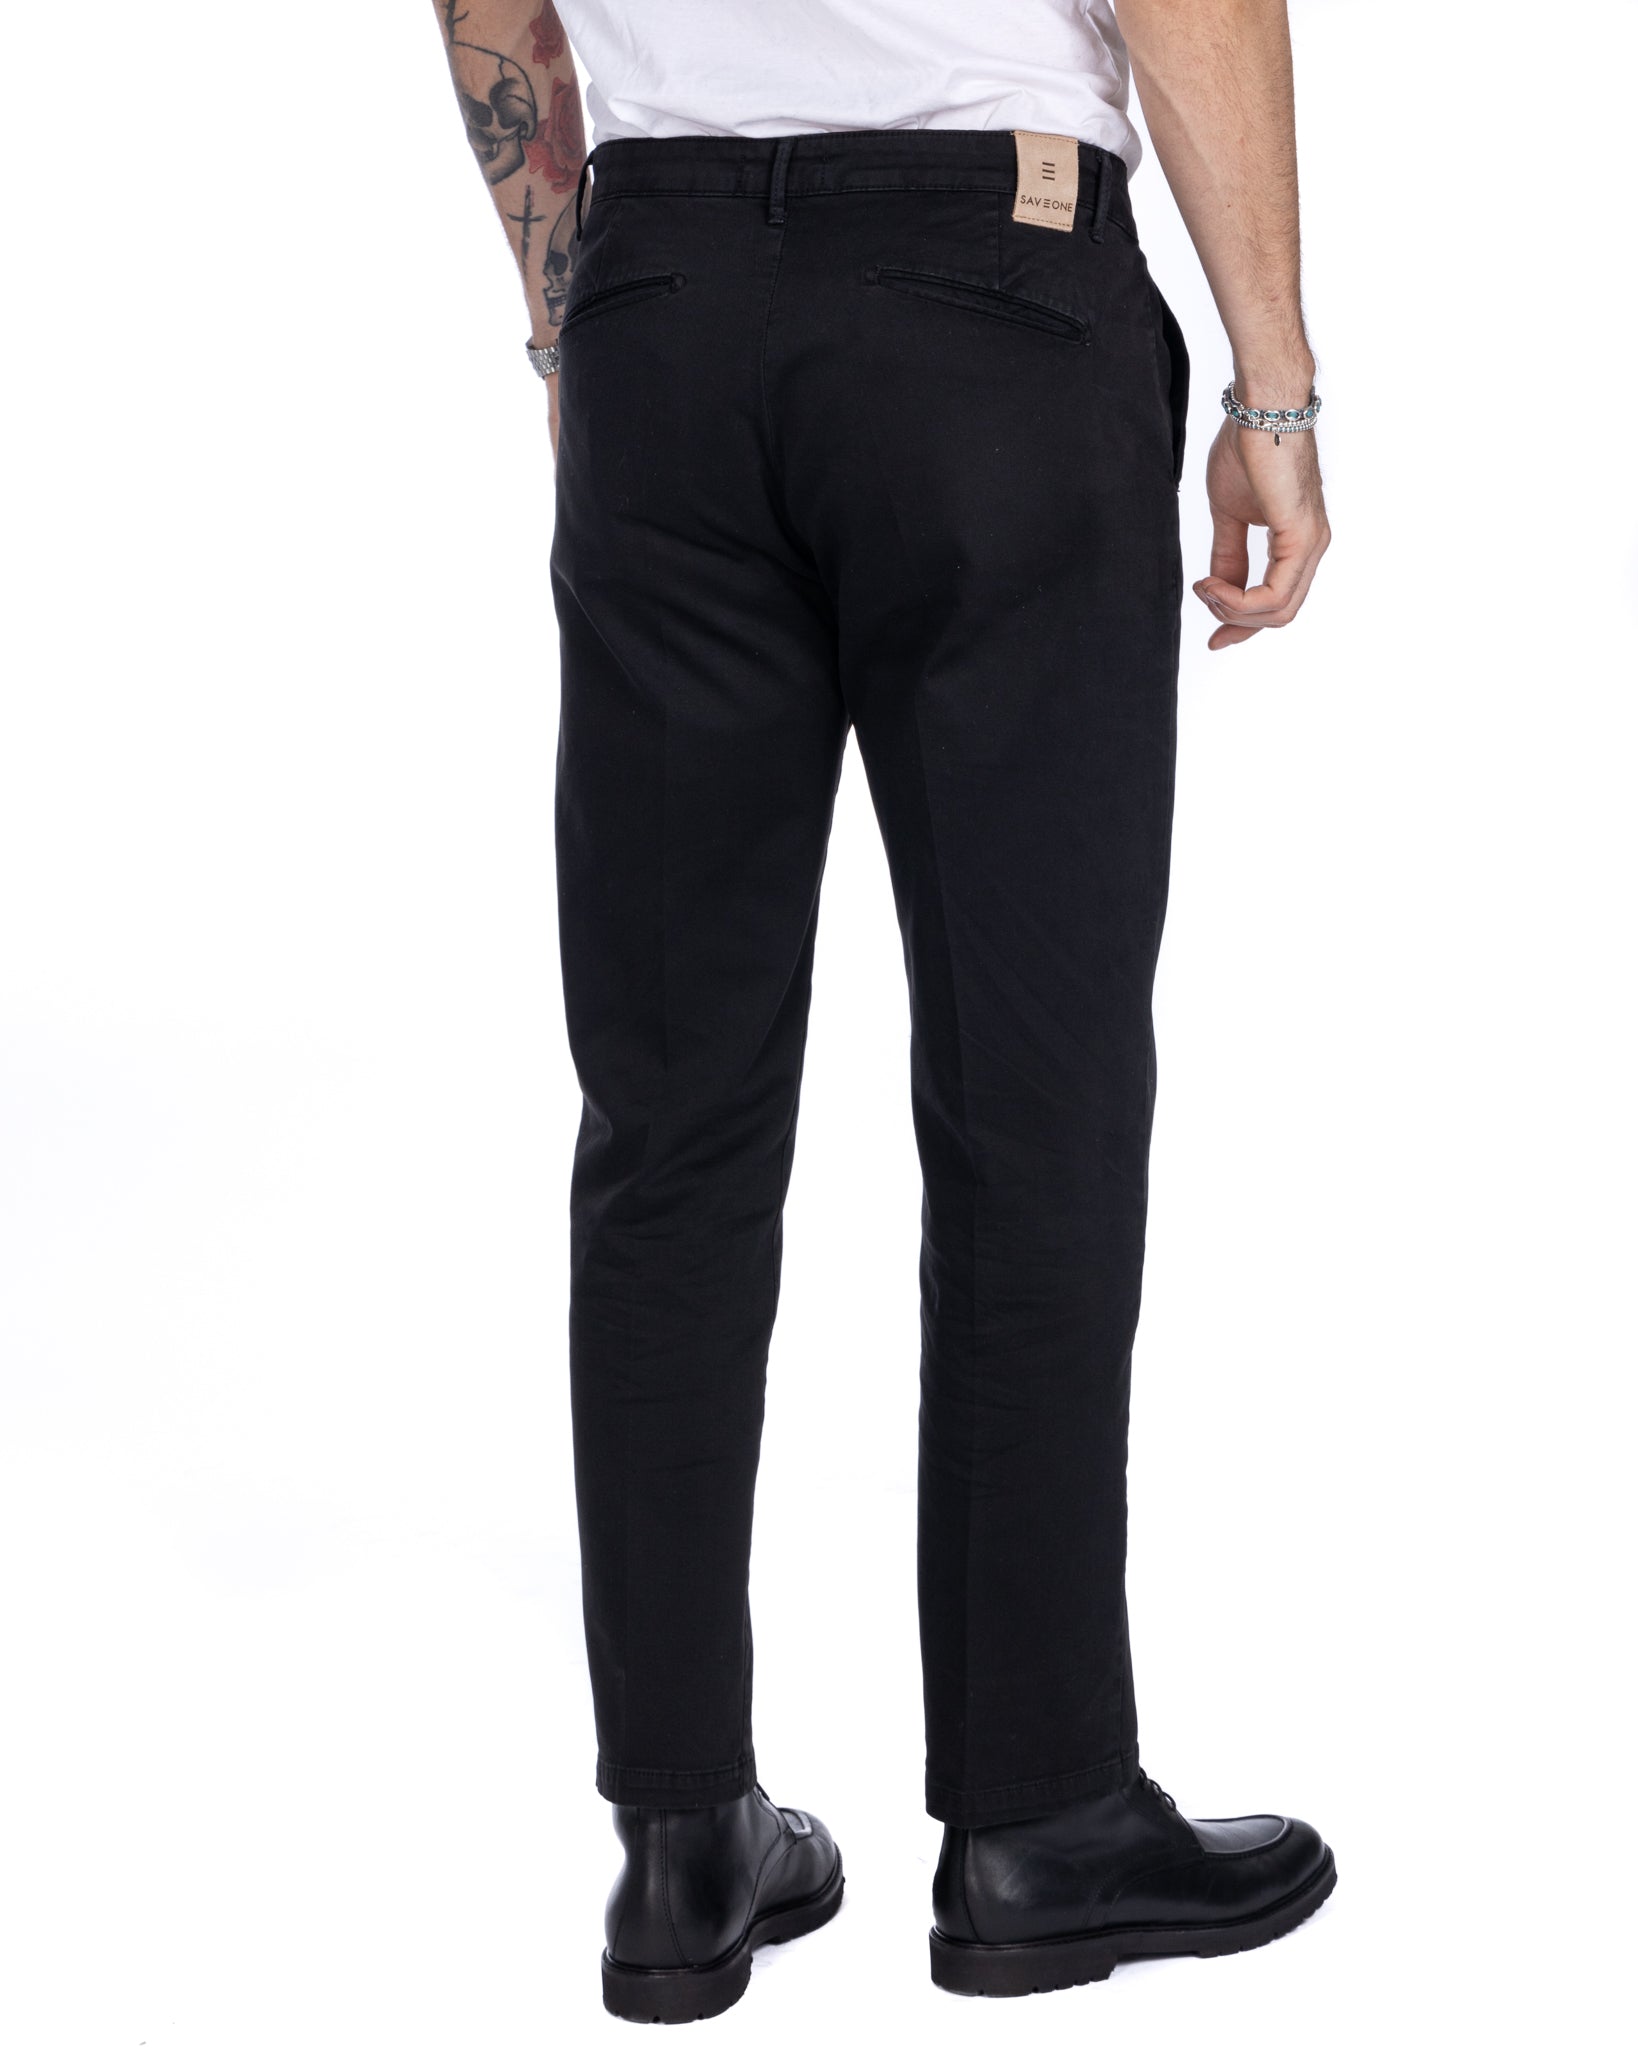 Sorrento - pantalone fondo largo nero